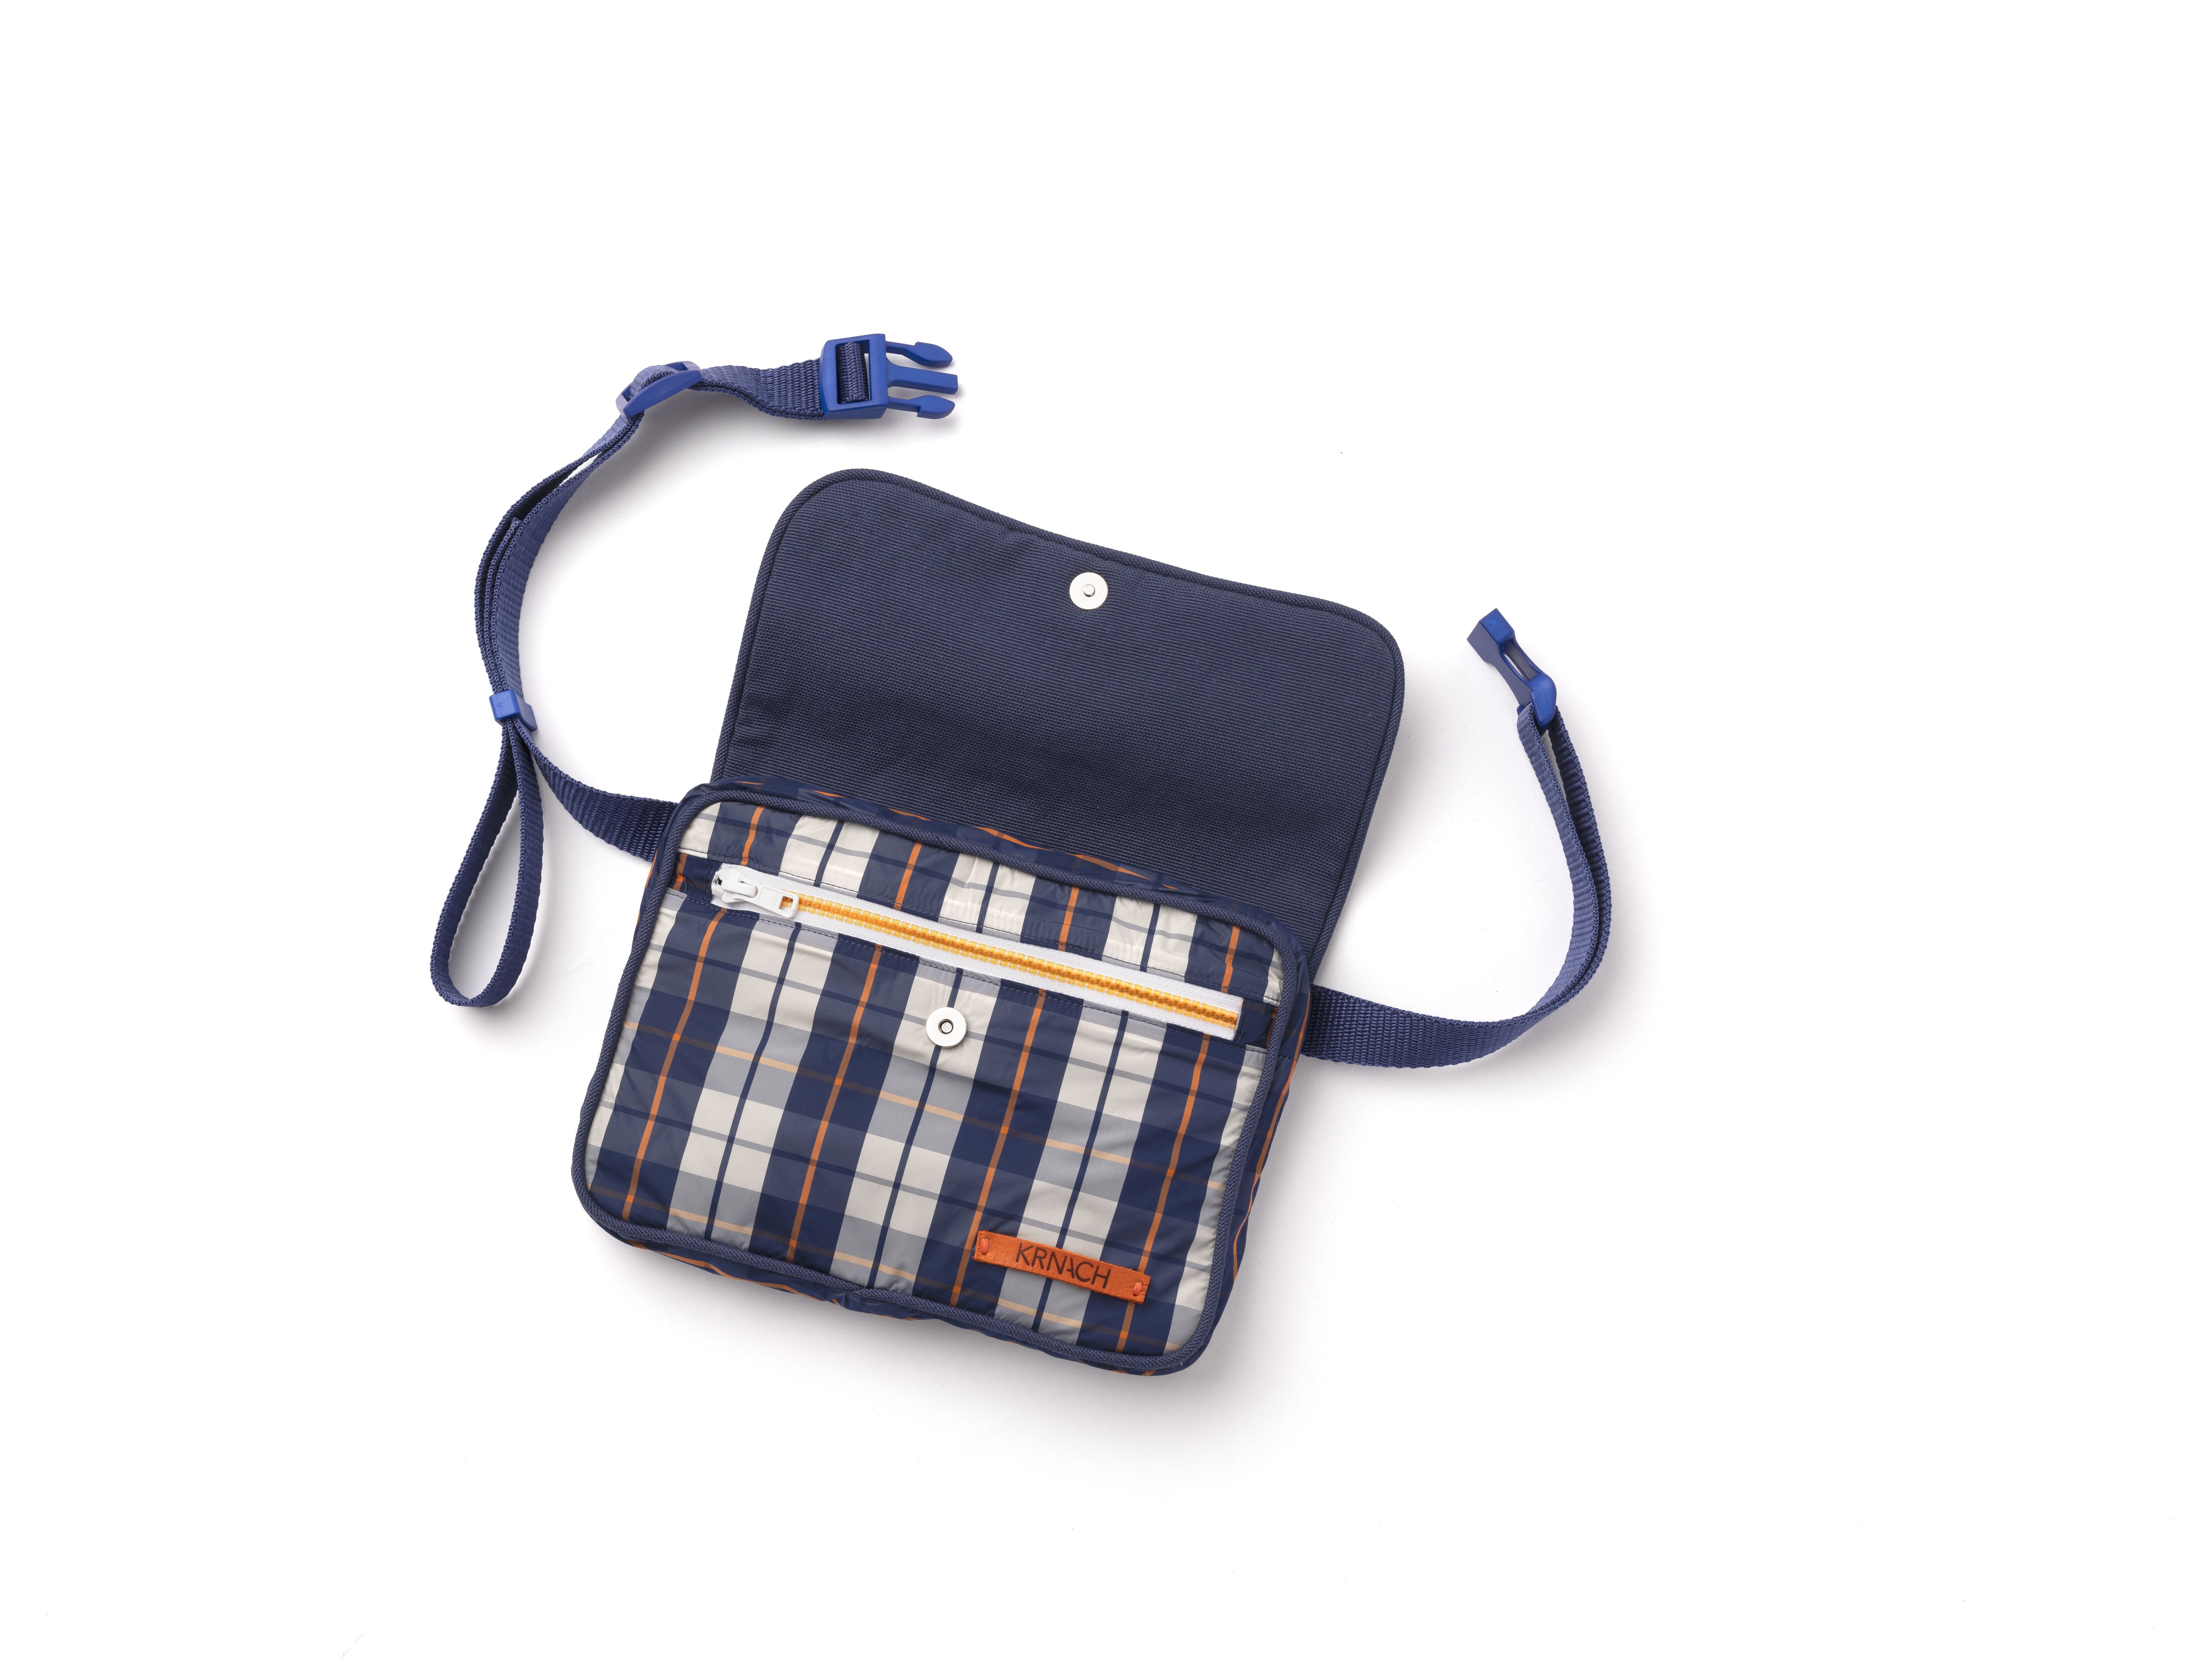 Krnach  Belt Bag  San Remo Nylon  Plaid Jacquard   Eco  Sustainable  Upcycled Fashion Bag